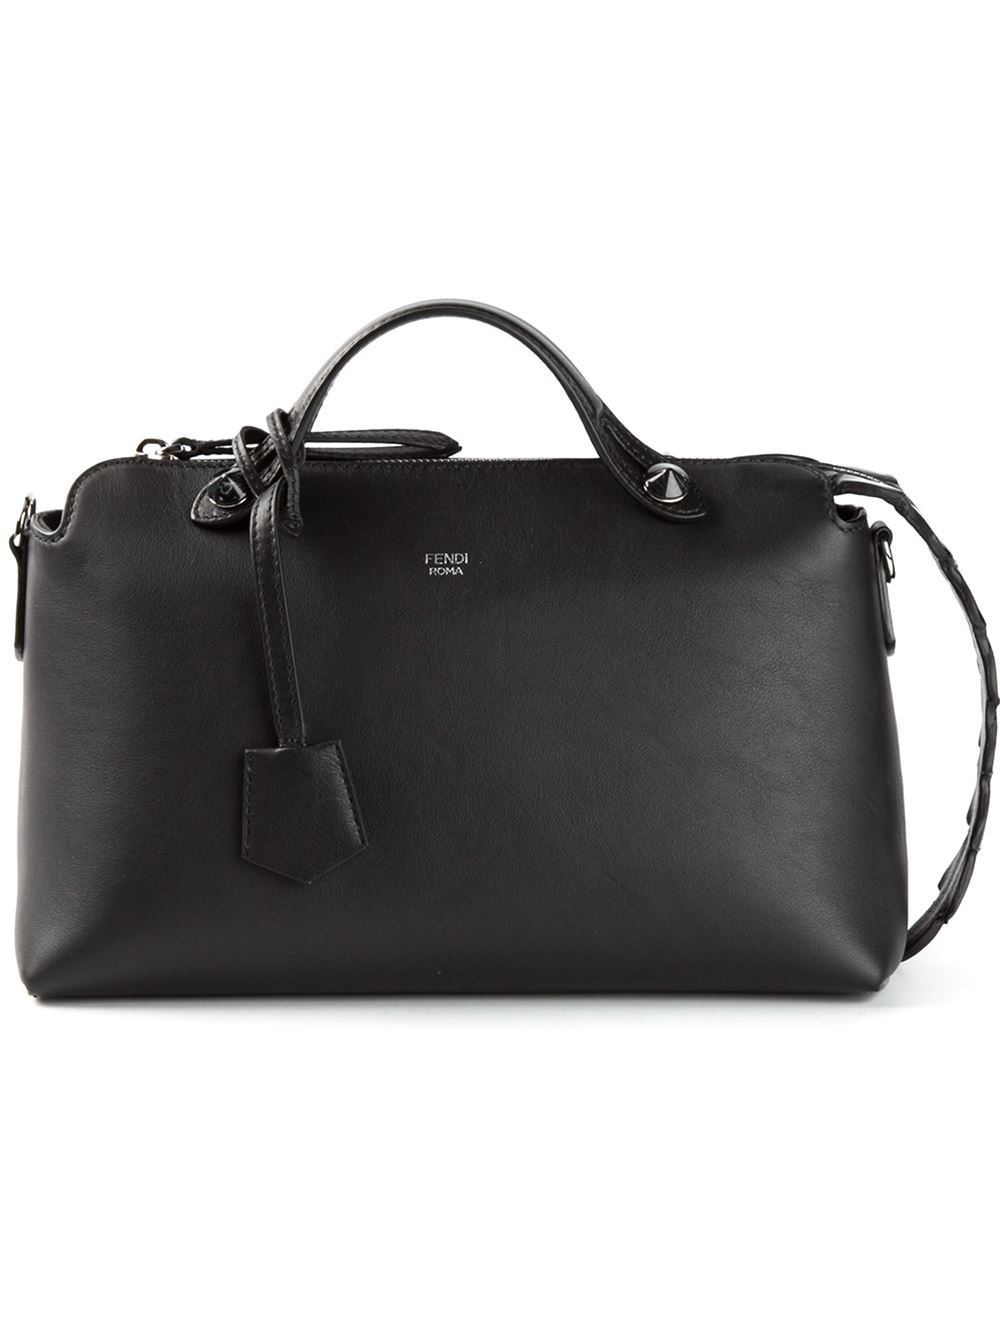 Fendi By The Way Shoulder Bag in Black | Lyst